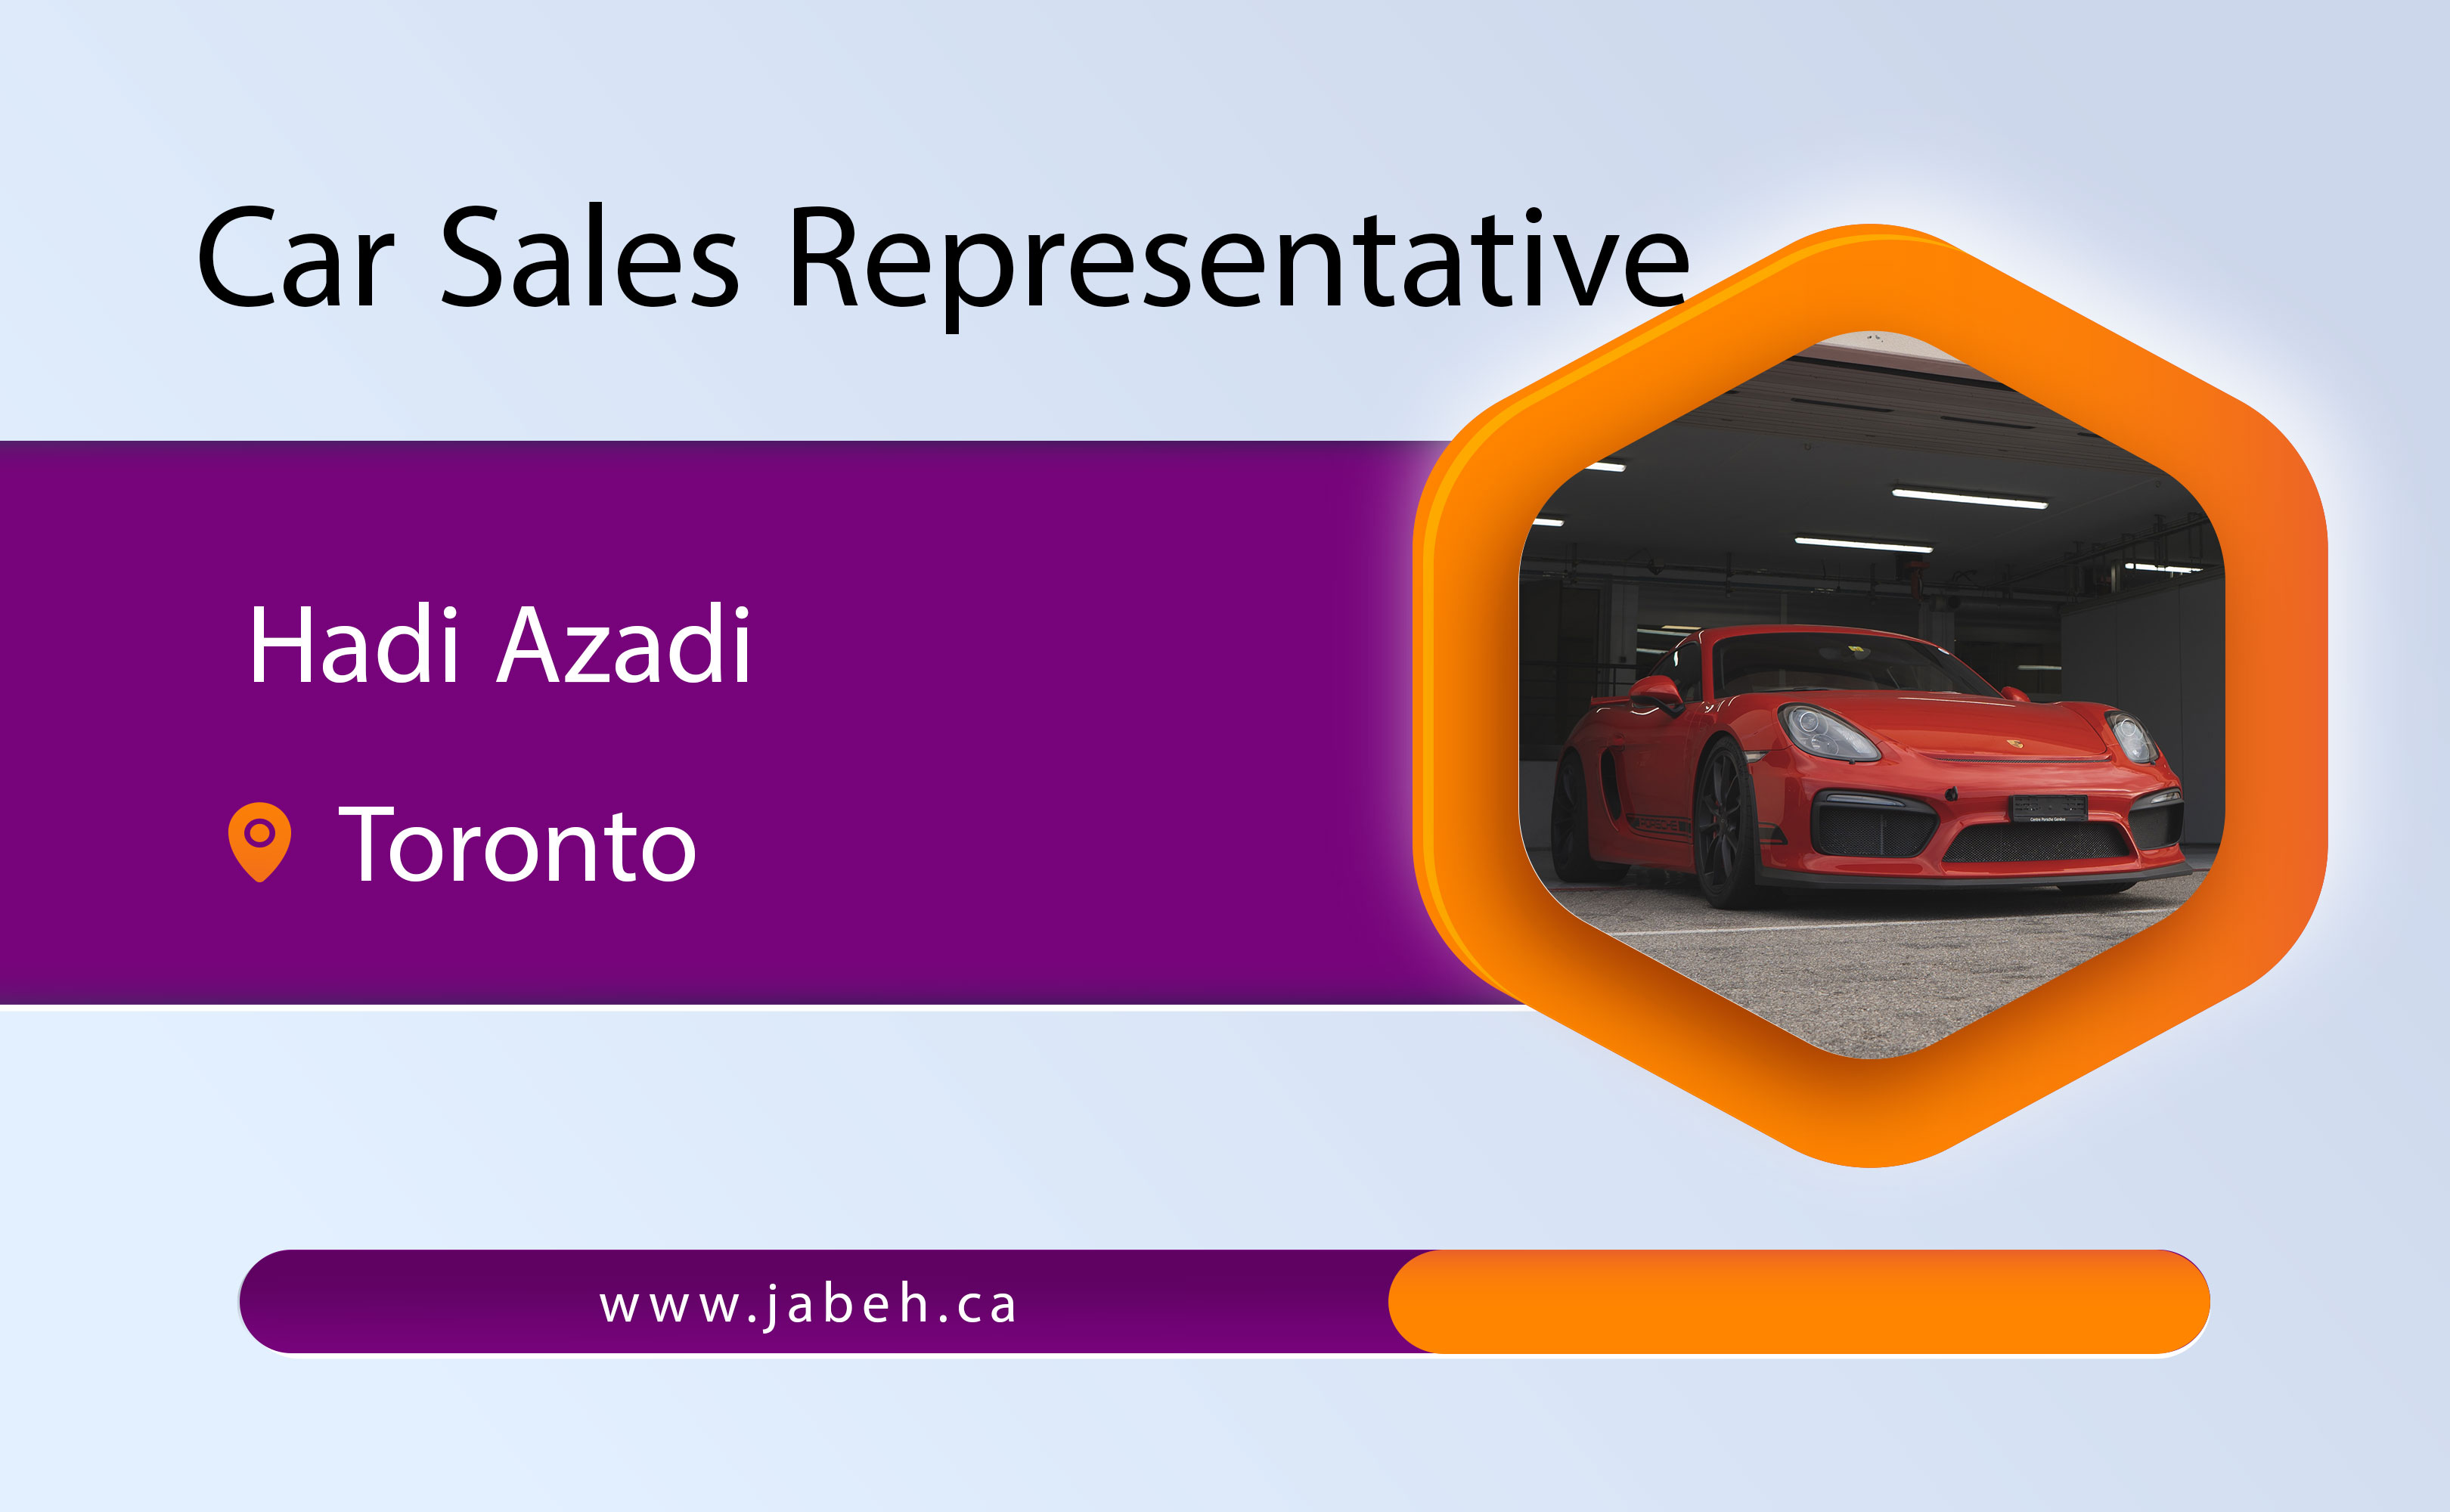 Iranian sales representative of Hadi Azadi cars in Toronto